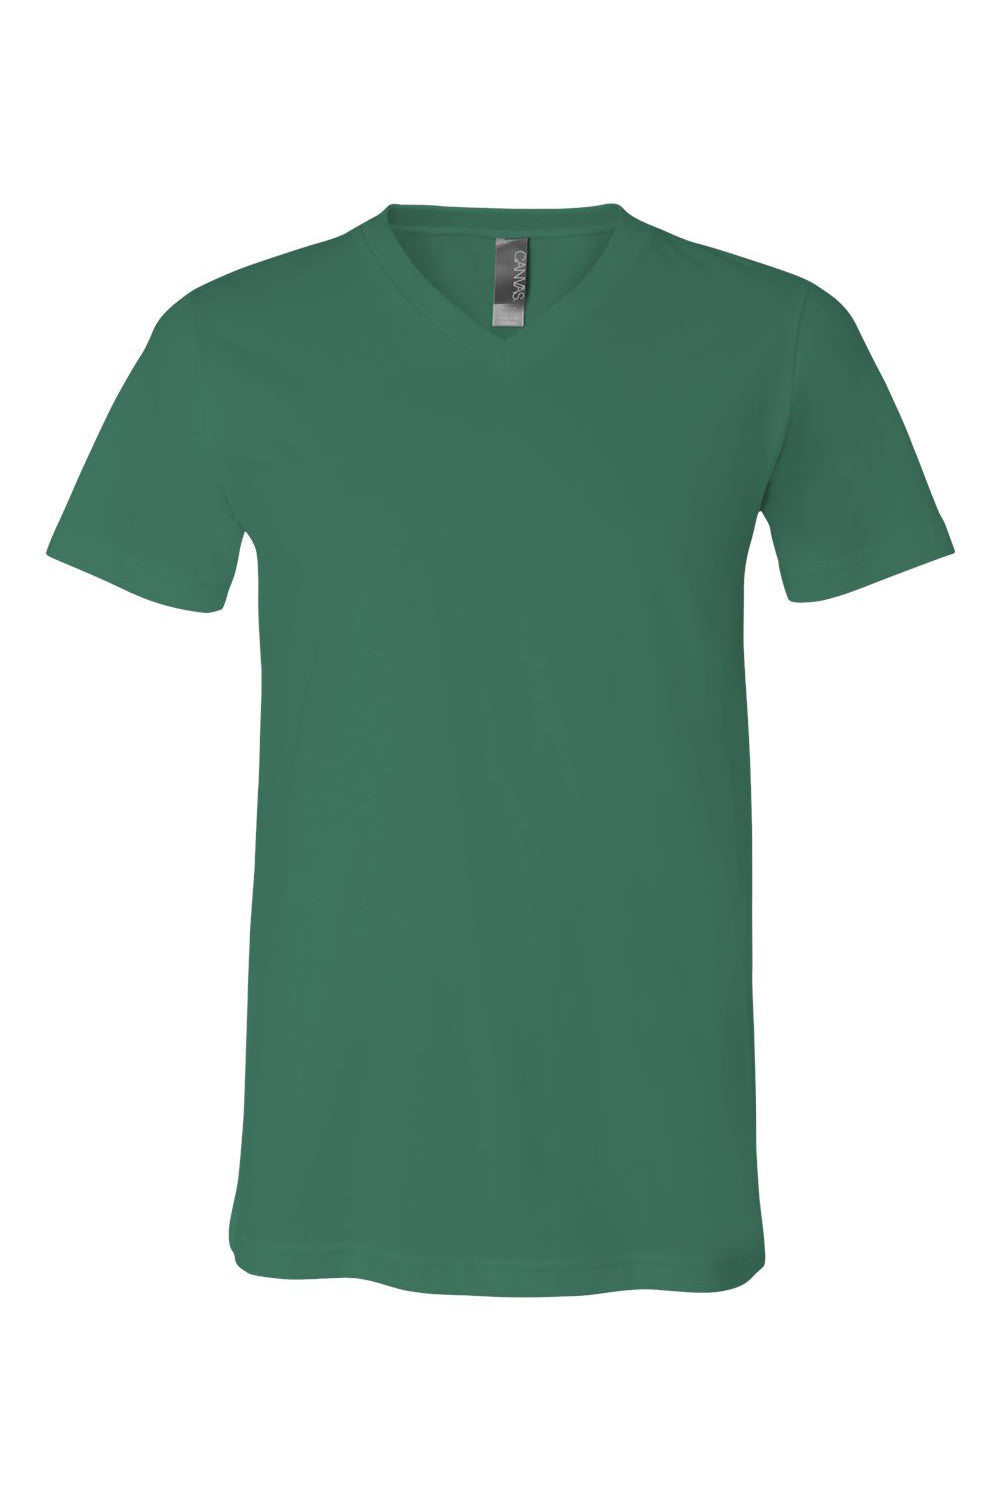 Bella + Canvas BC3005/3005/3655C Mens Jersey Short Sleeve V-Neck T-Shirt Kelly Green Flat Front